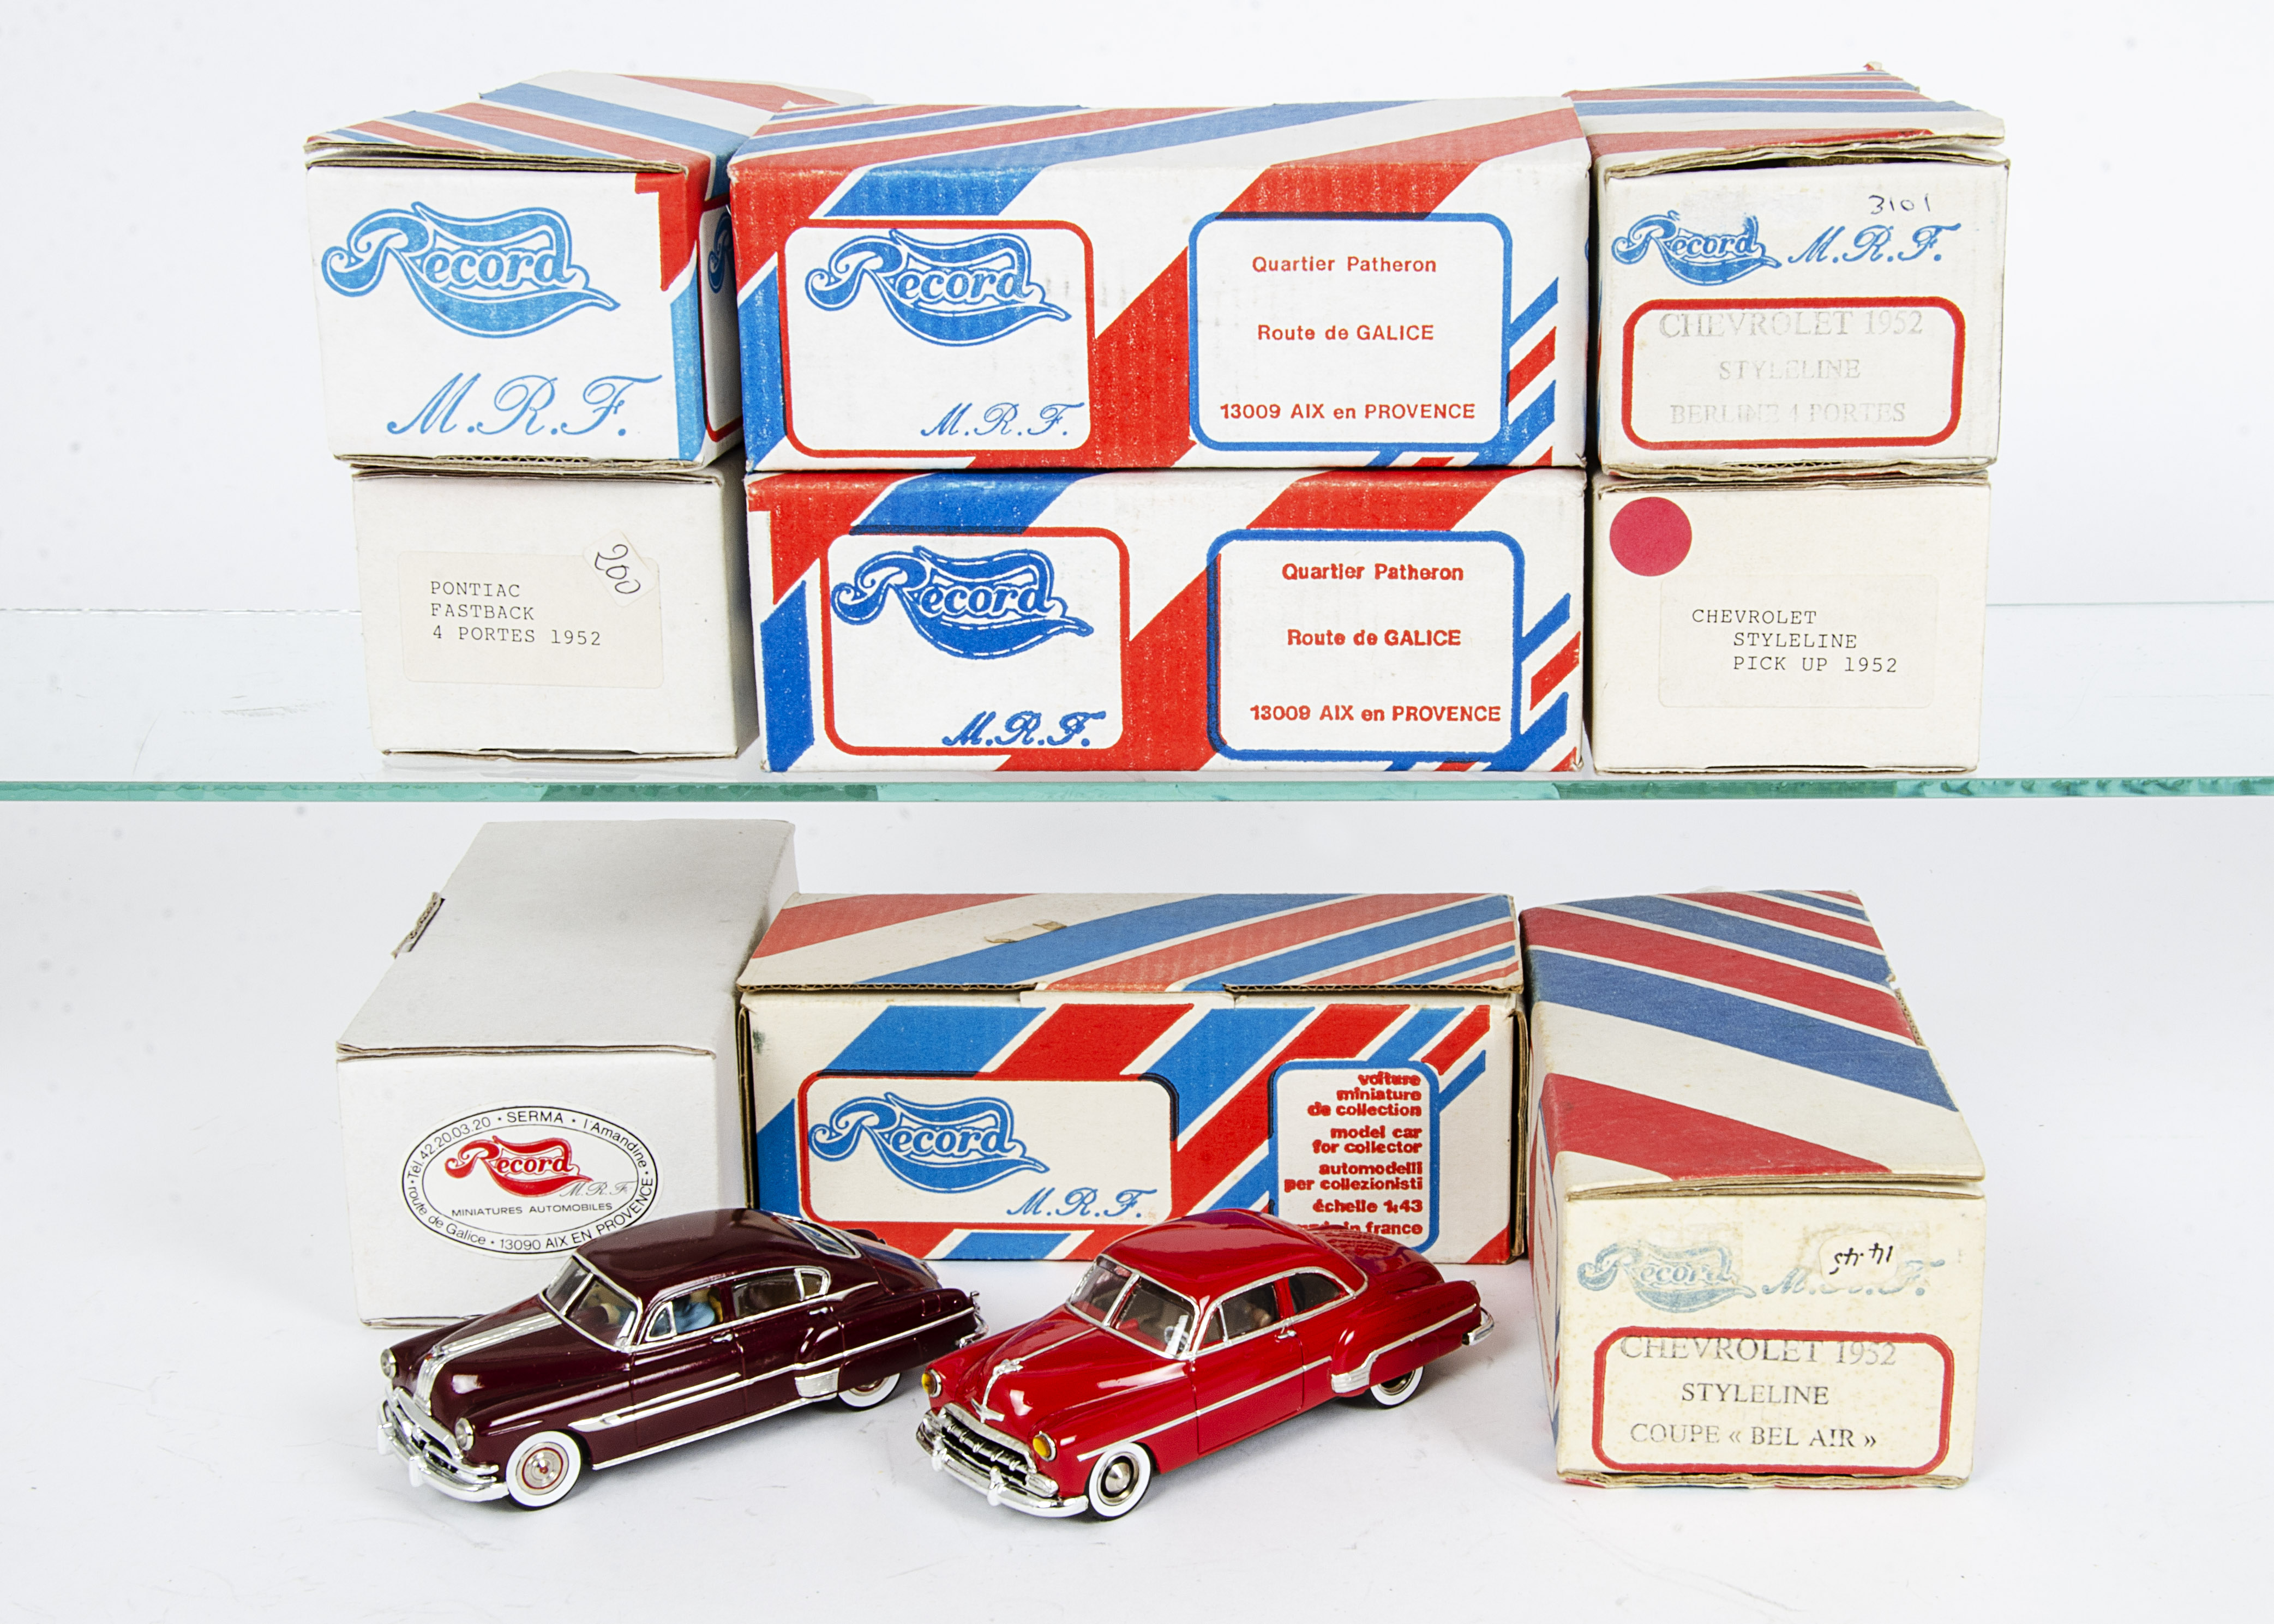 Record 1/43 Resin Model Cars, including Chevrolet Styleline Coupe 1952, Chevrolet Styleline Pick